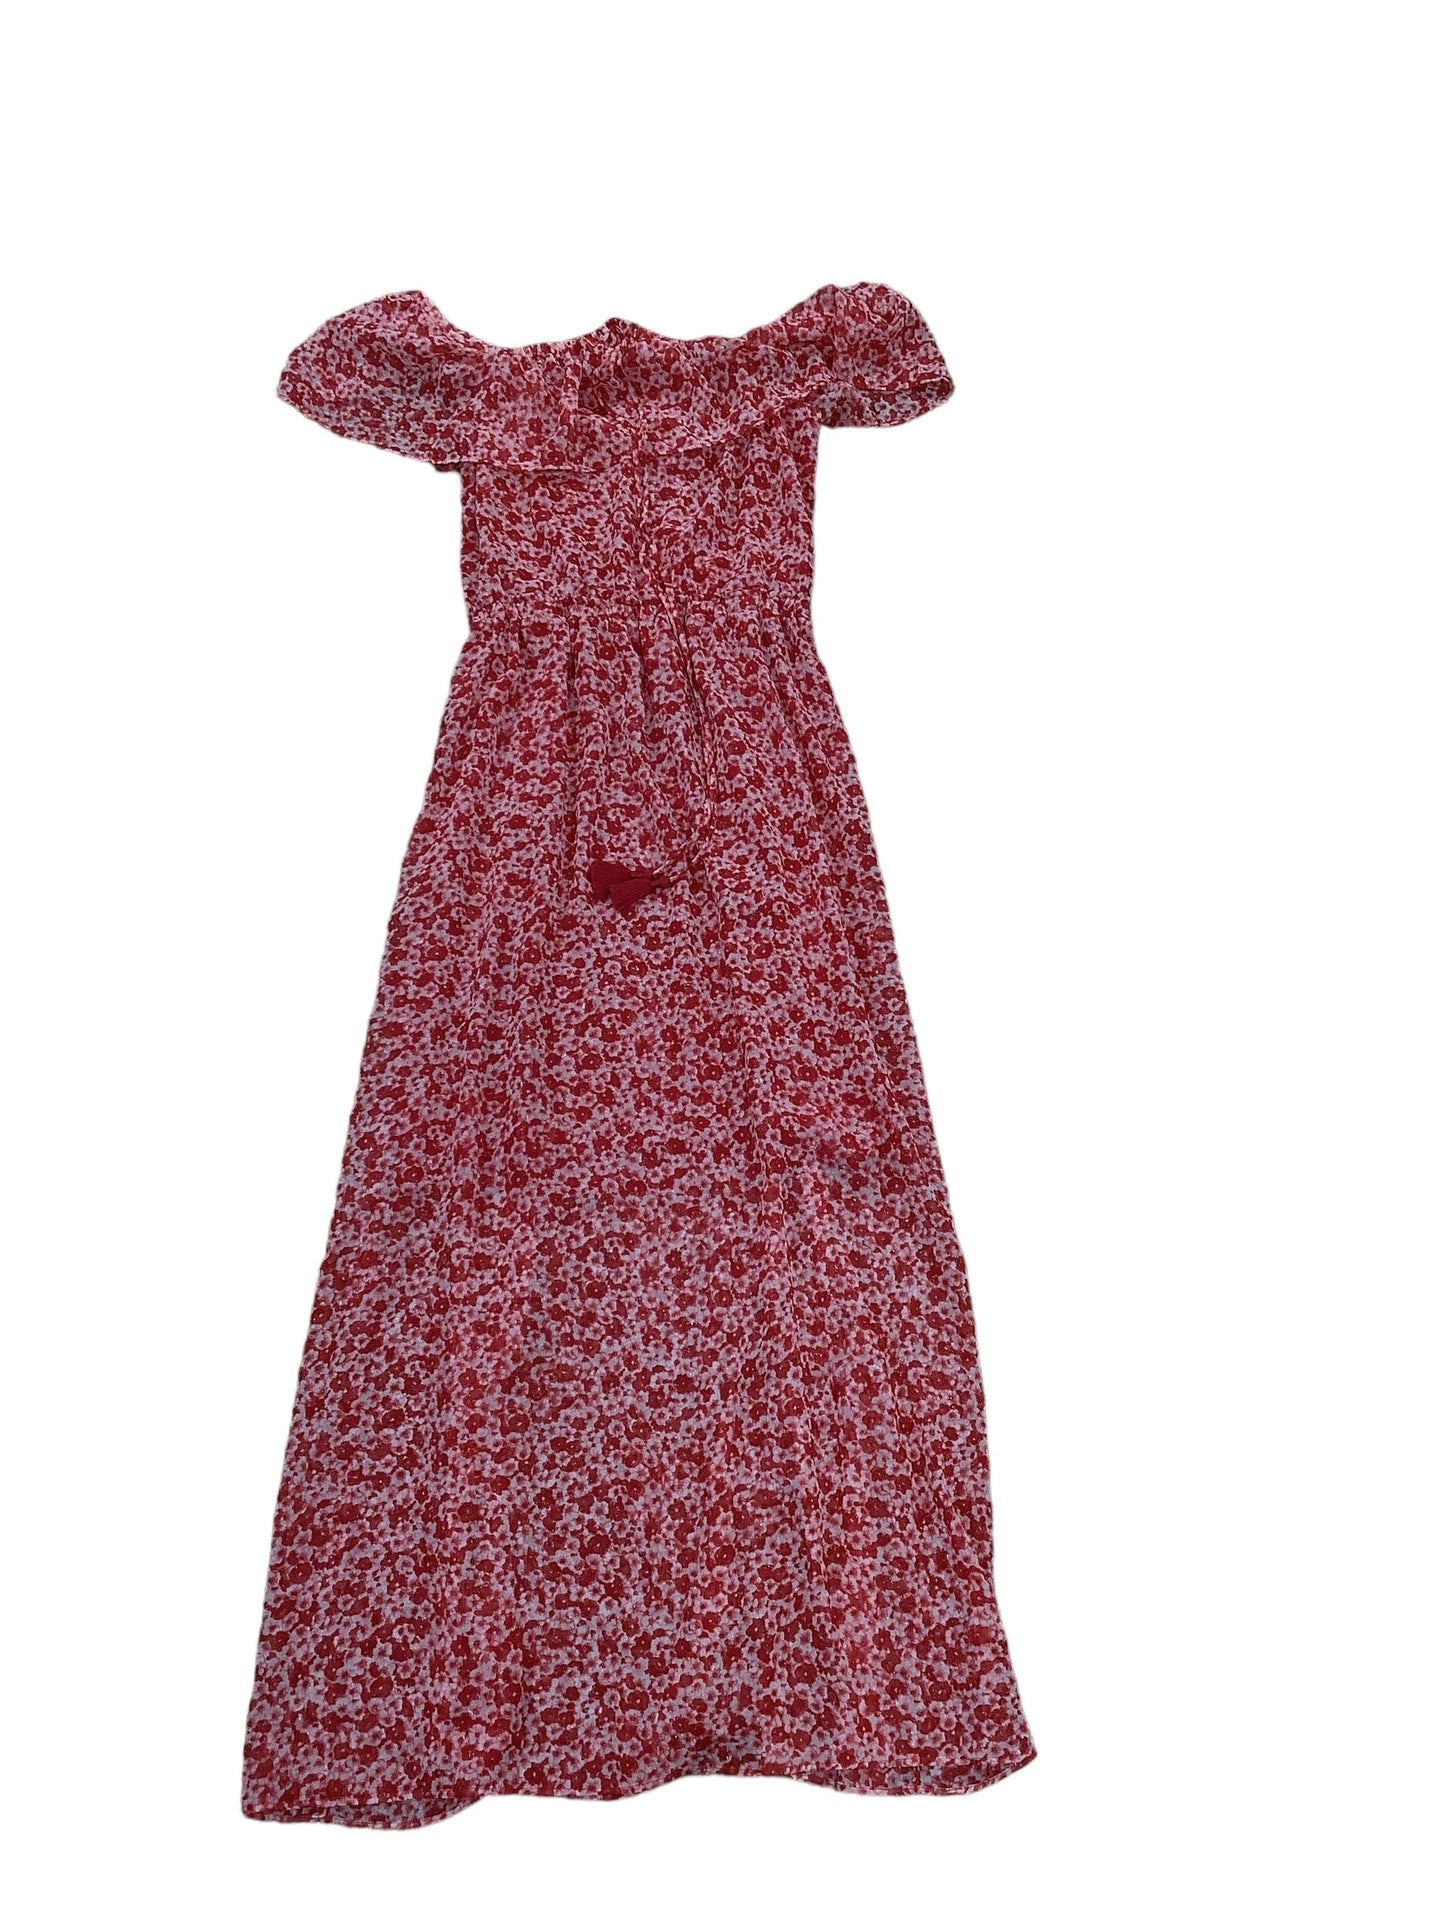 Pink Dress Designer Michael By Michael Kors, Size 4